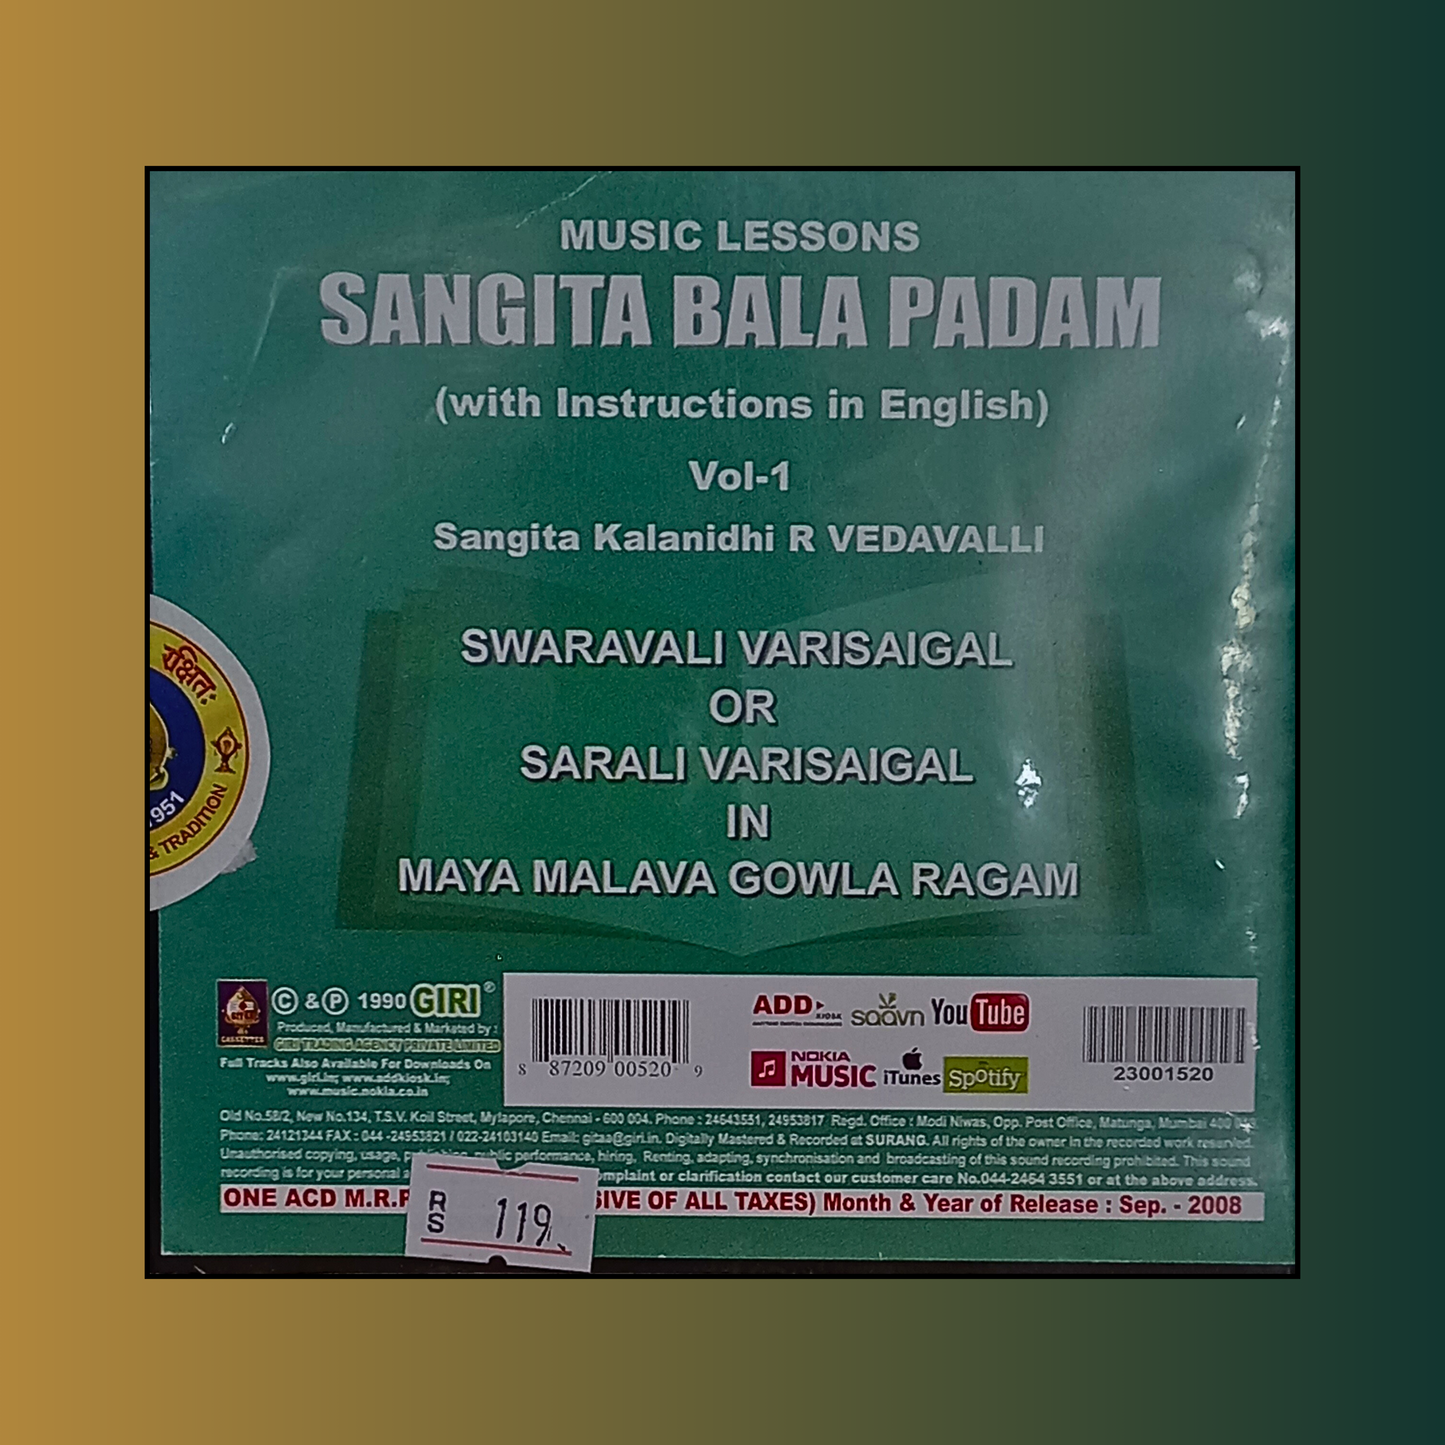 Sangita Bala Padam Vol 1 English - CD Player